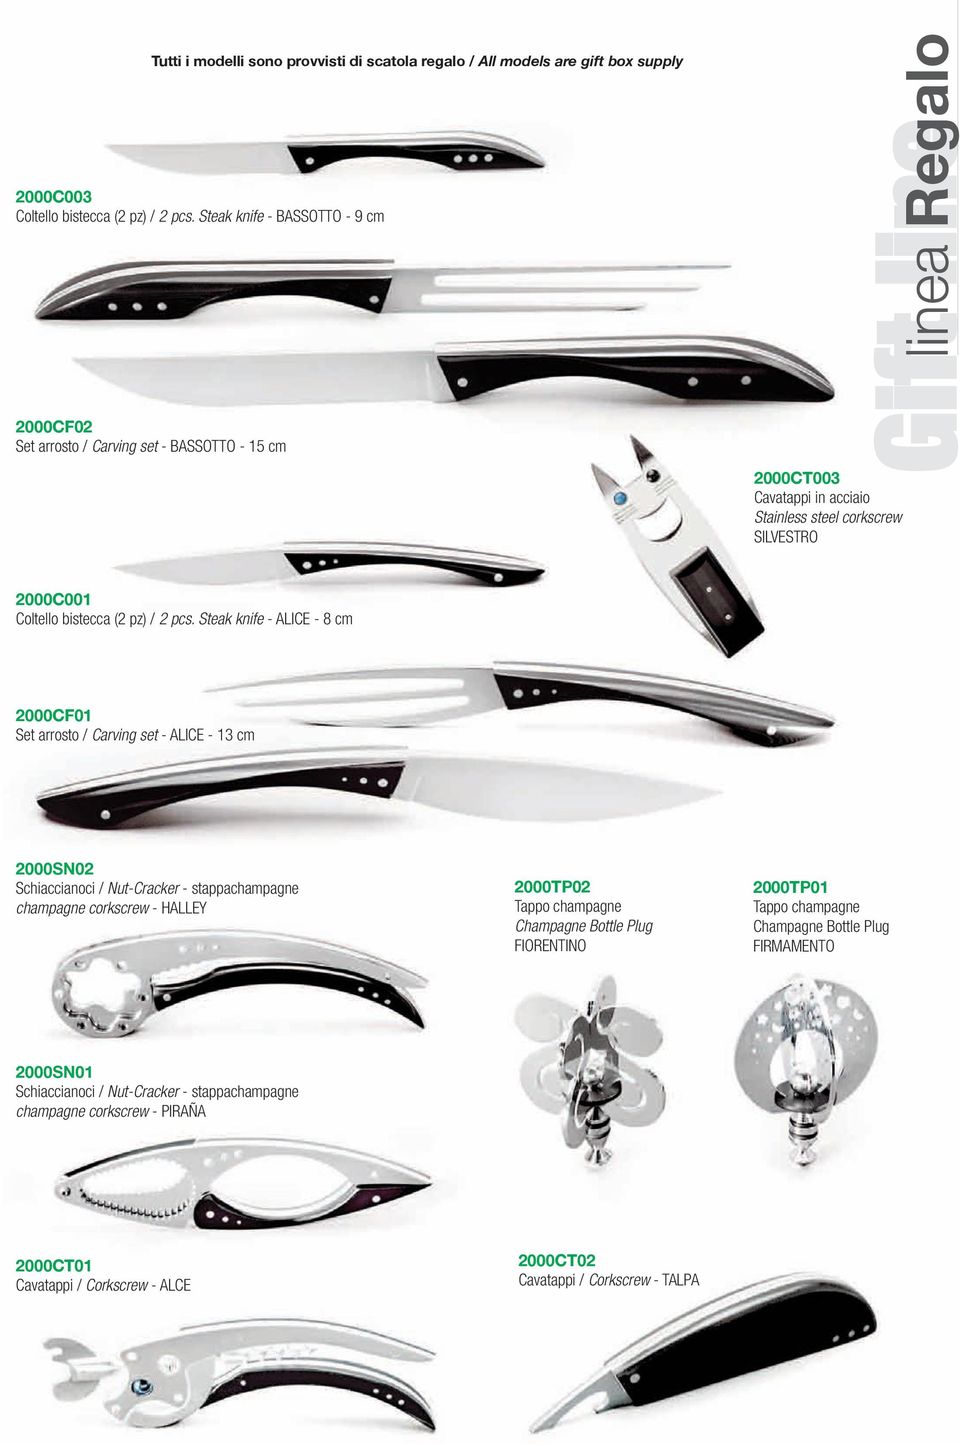 acciaio Stainless steel corkscrew SILVESTRO Gift linea line Regalo 2000C001 Coltello bistecca (2 pz) / 2 pcs.